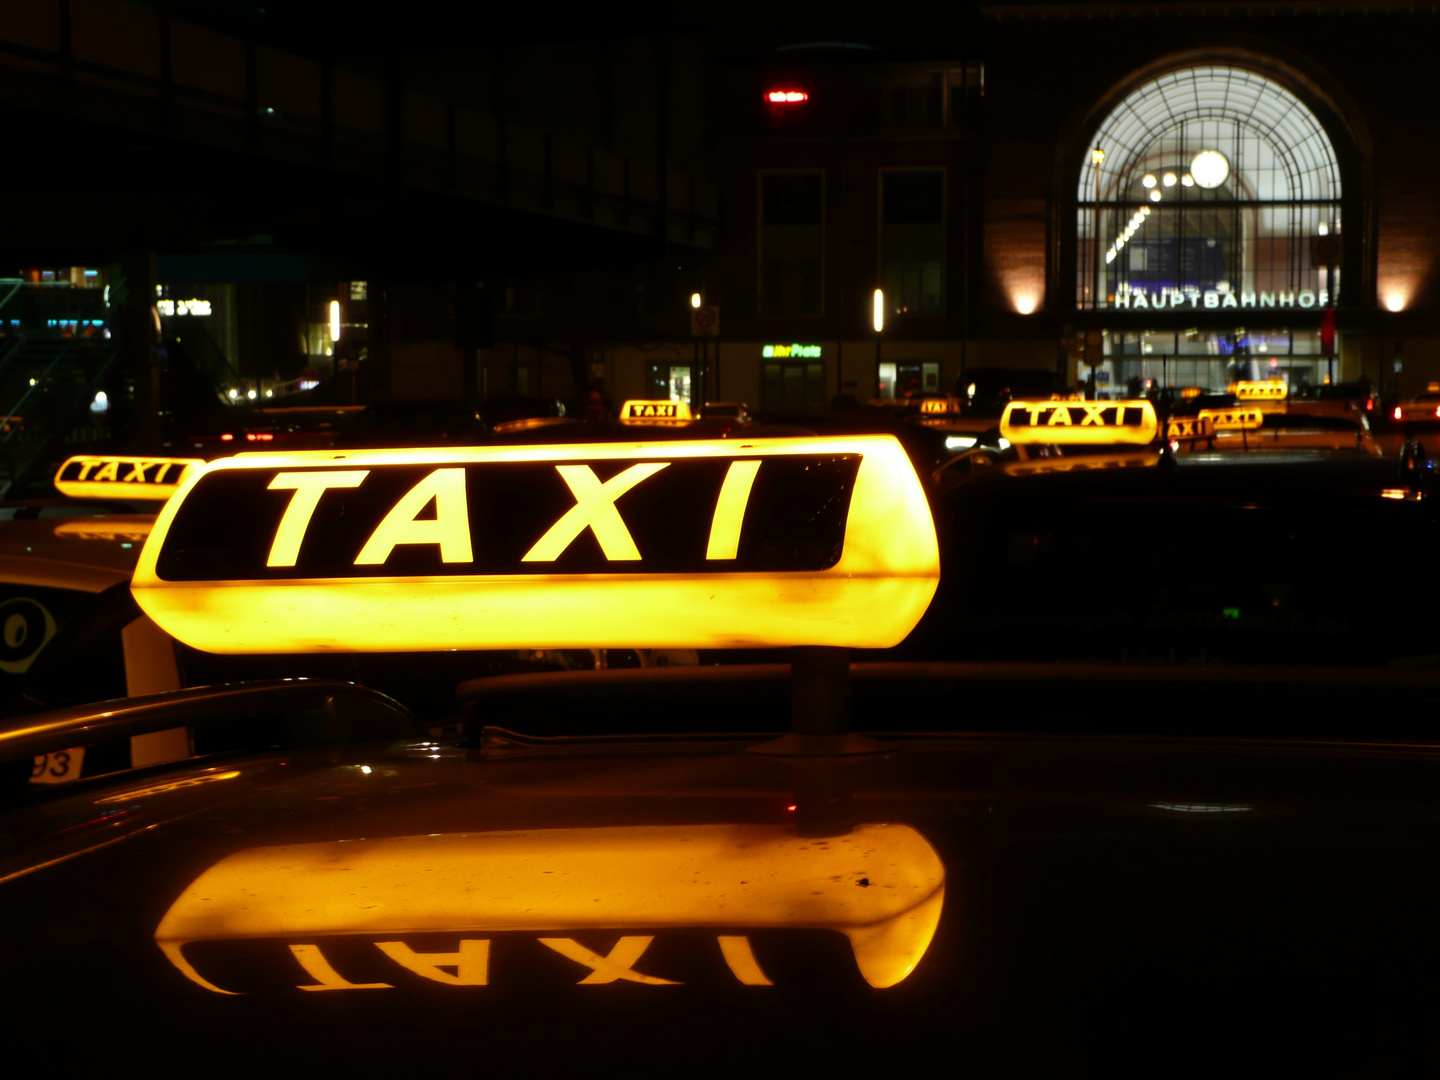 Taxis am Hbf Kiel